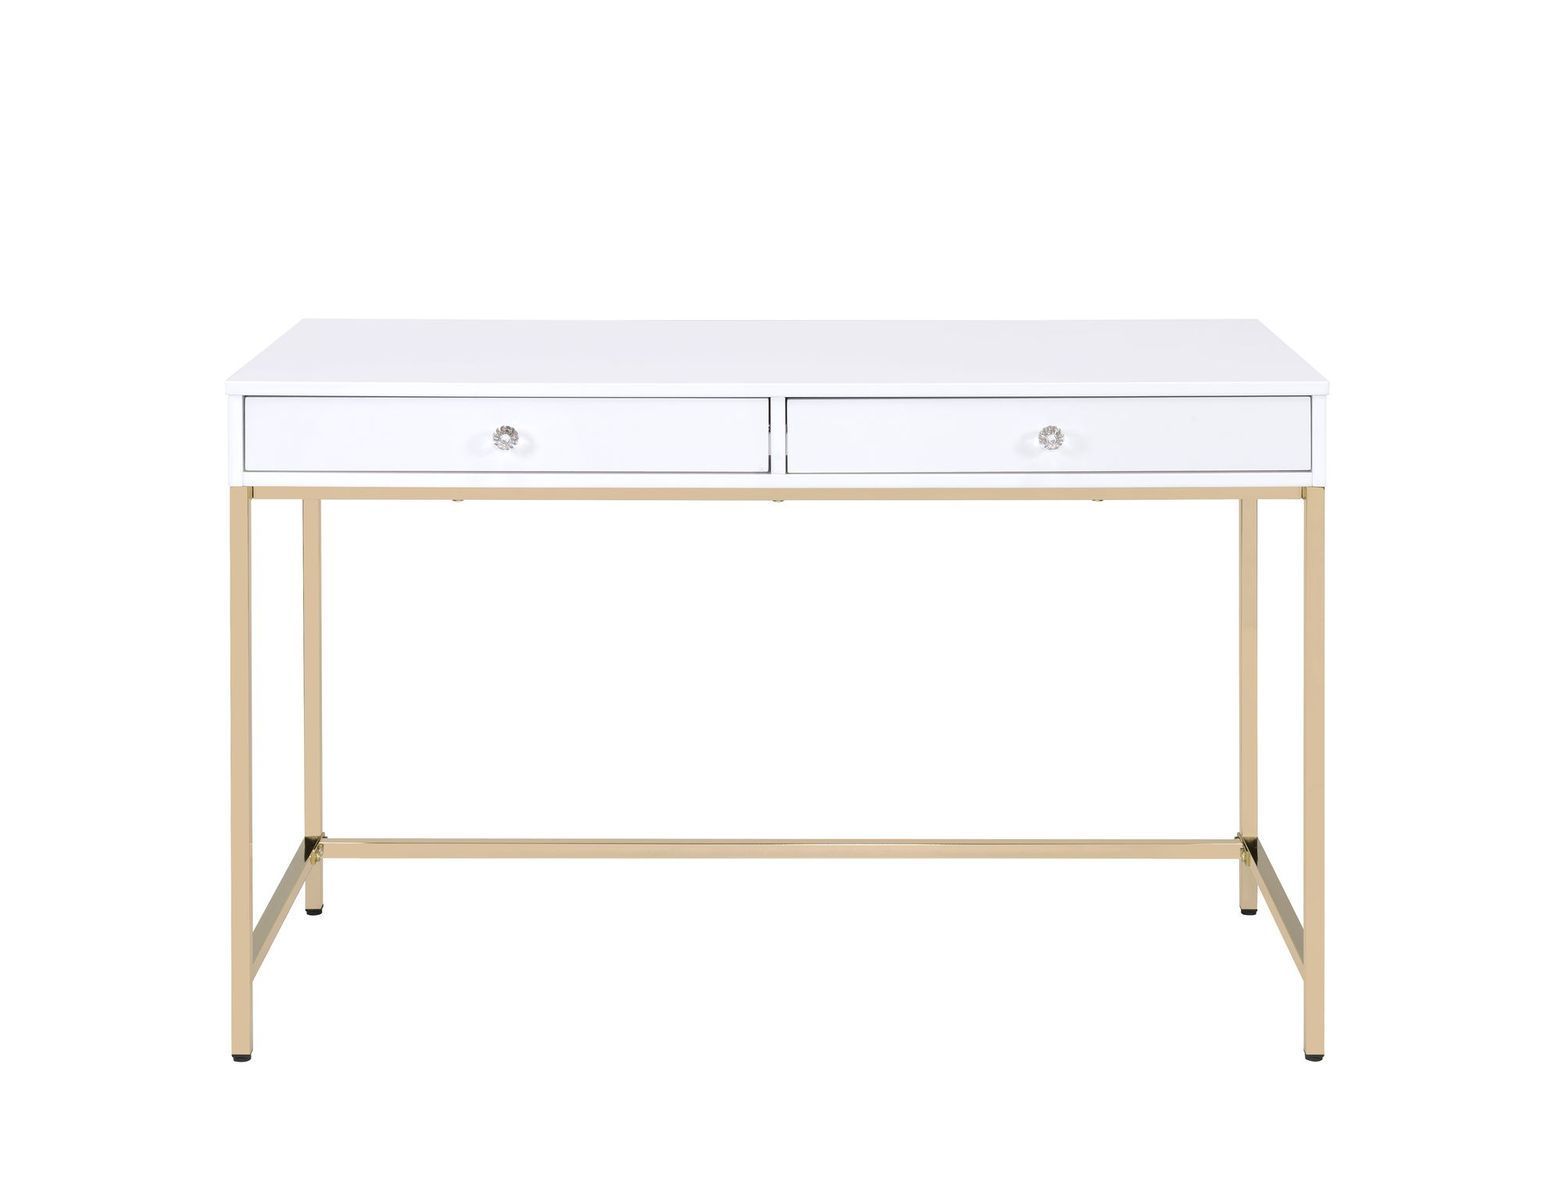  White High Gloss & Gold Contemporary Desk